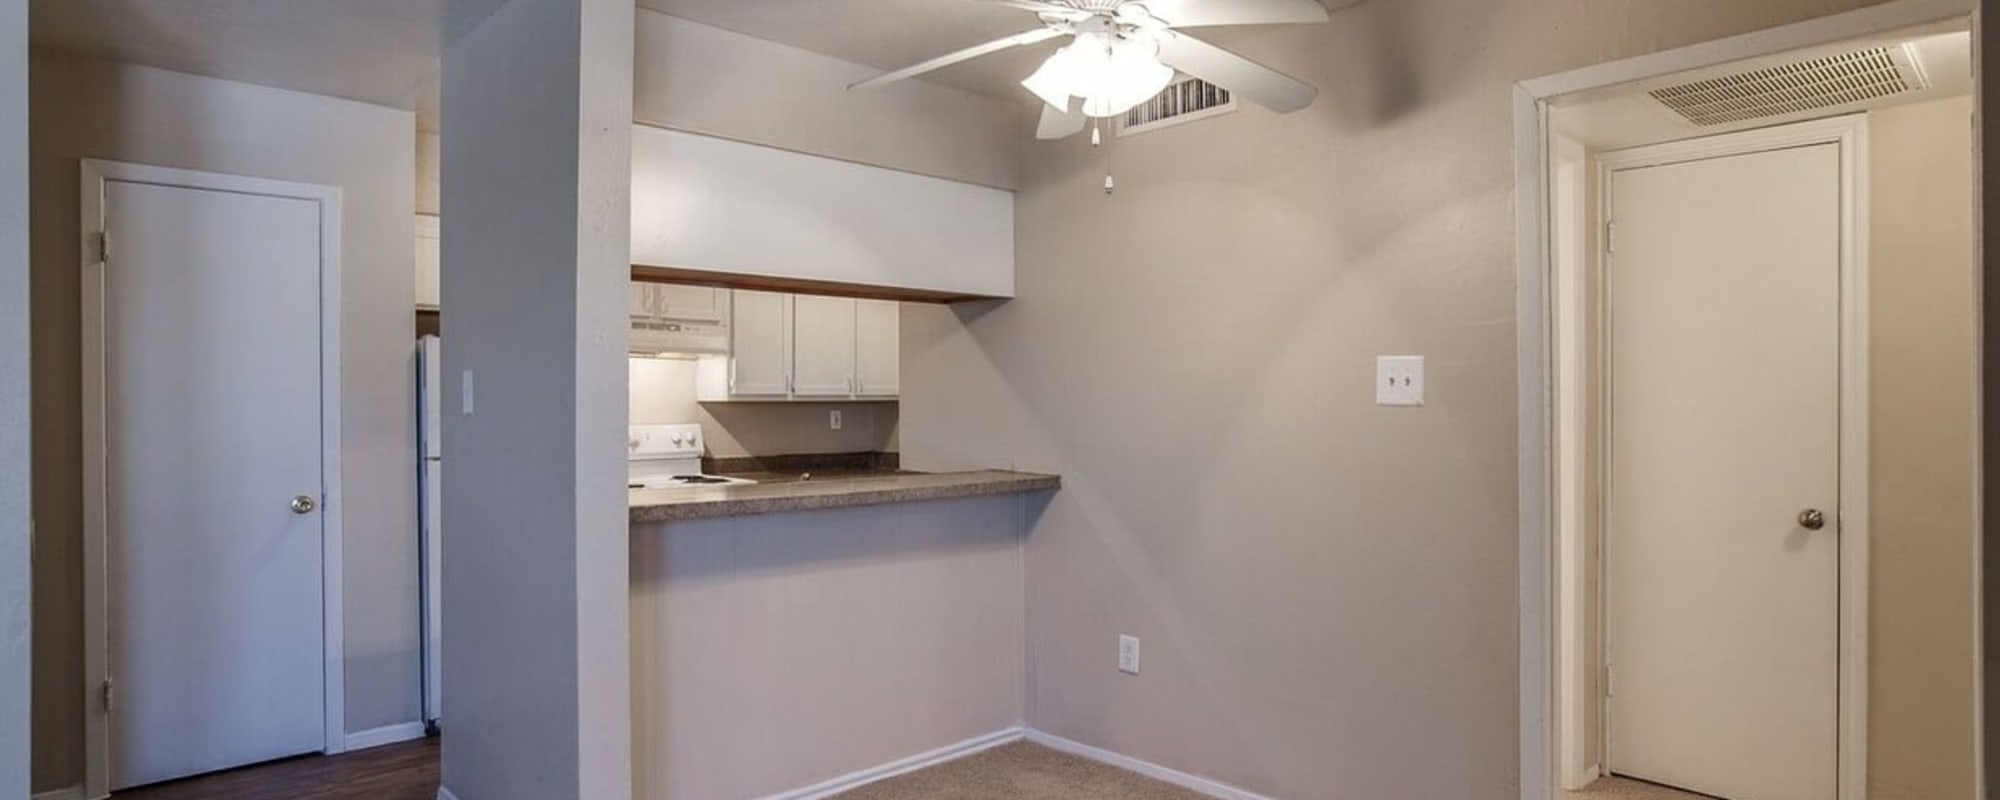 Kitchen area in a model home at Park Vista Apartments in San Antonio, Texas